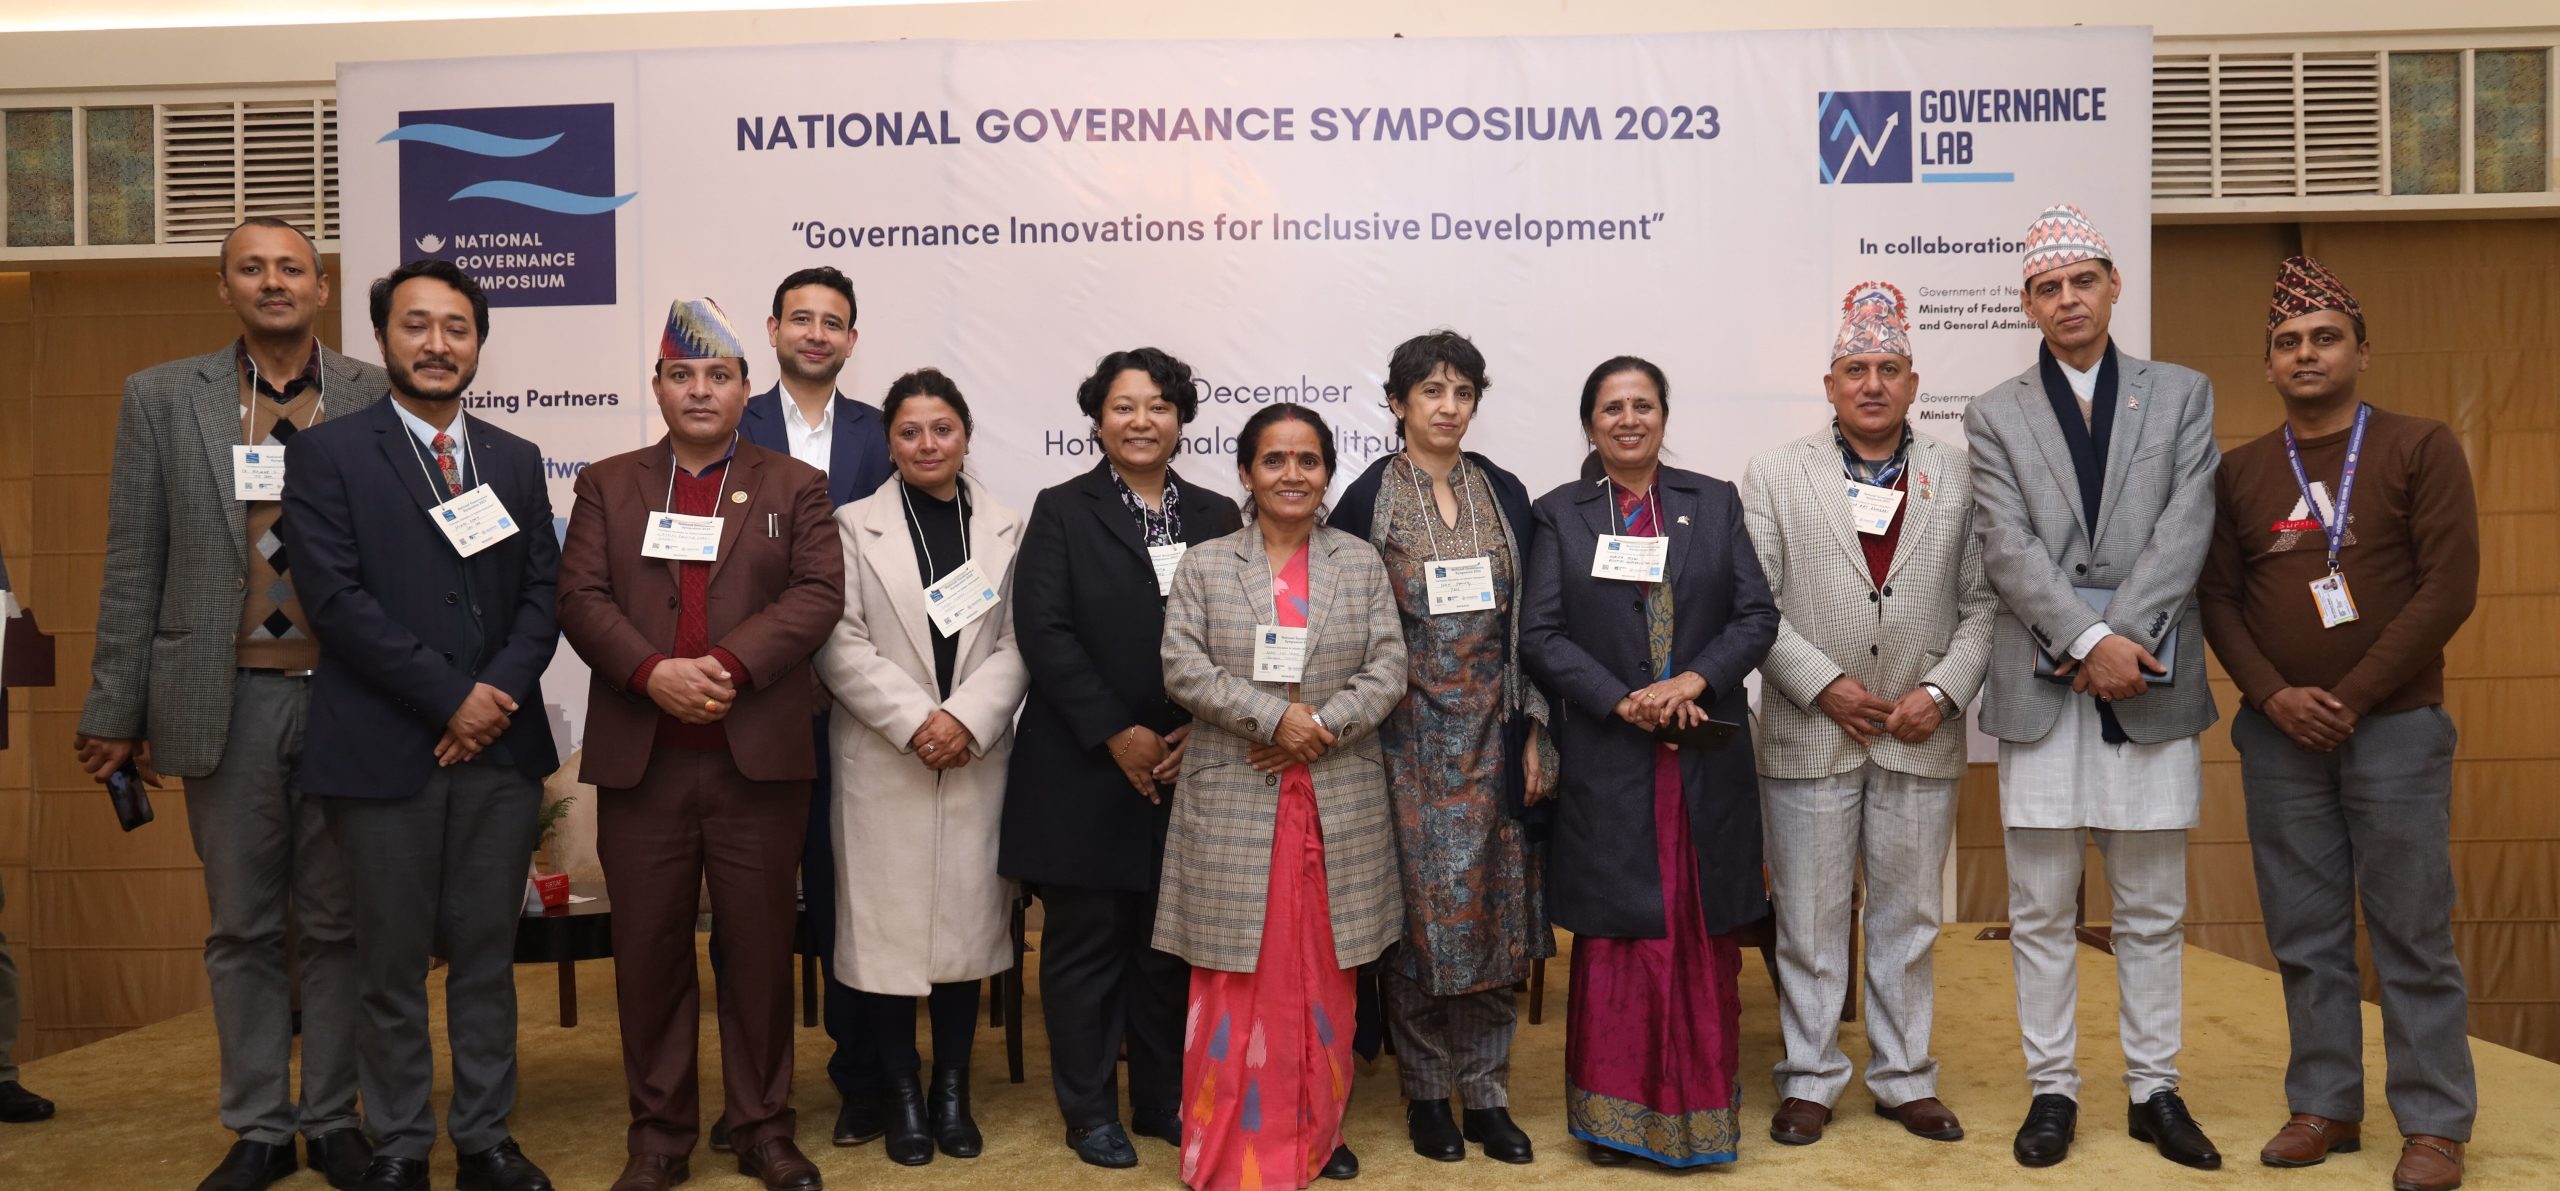 The Governance Lab Celebrates Success of National Governance Symposium 2023